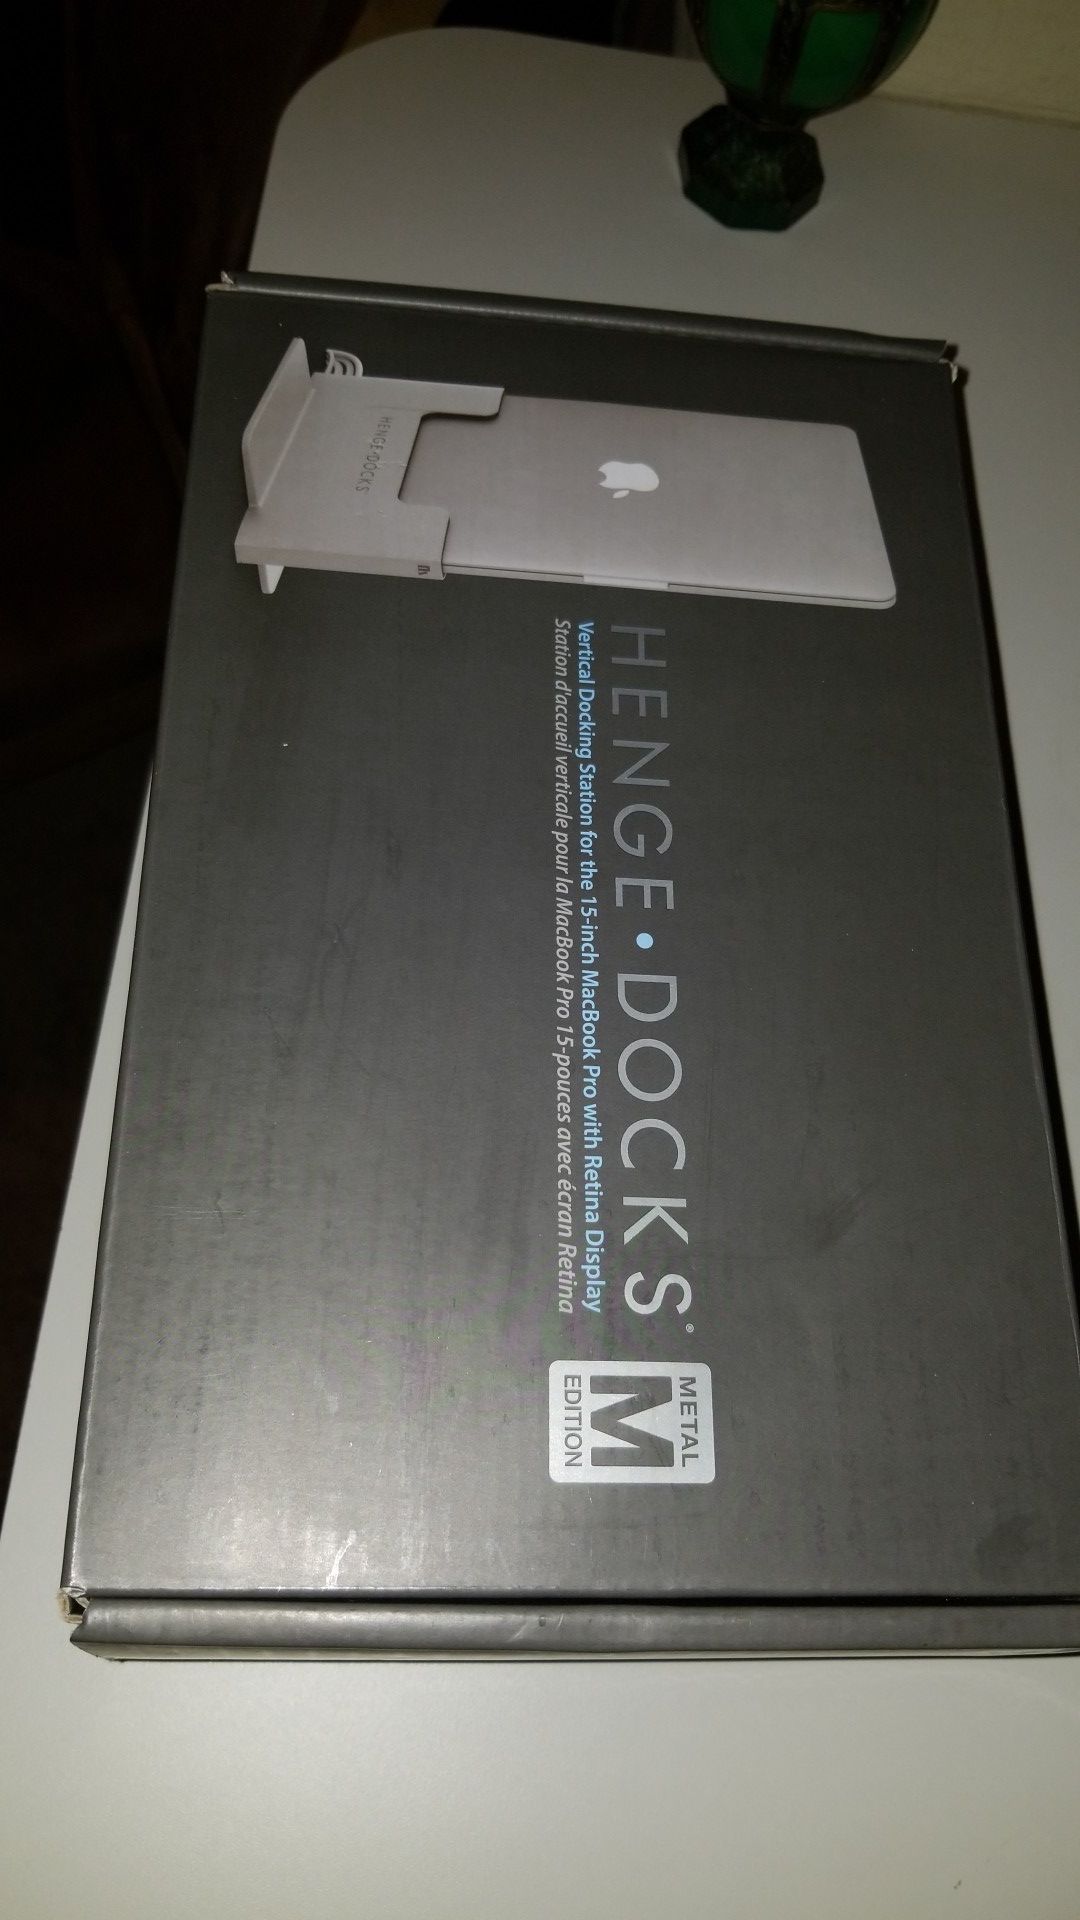 Henge Docks Metal Edition for Mac Book Pro with Retina